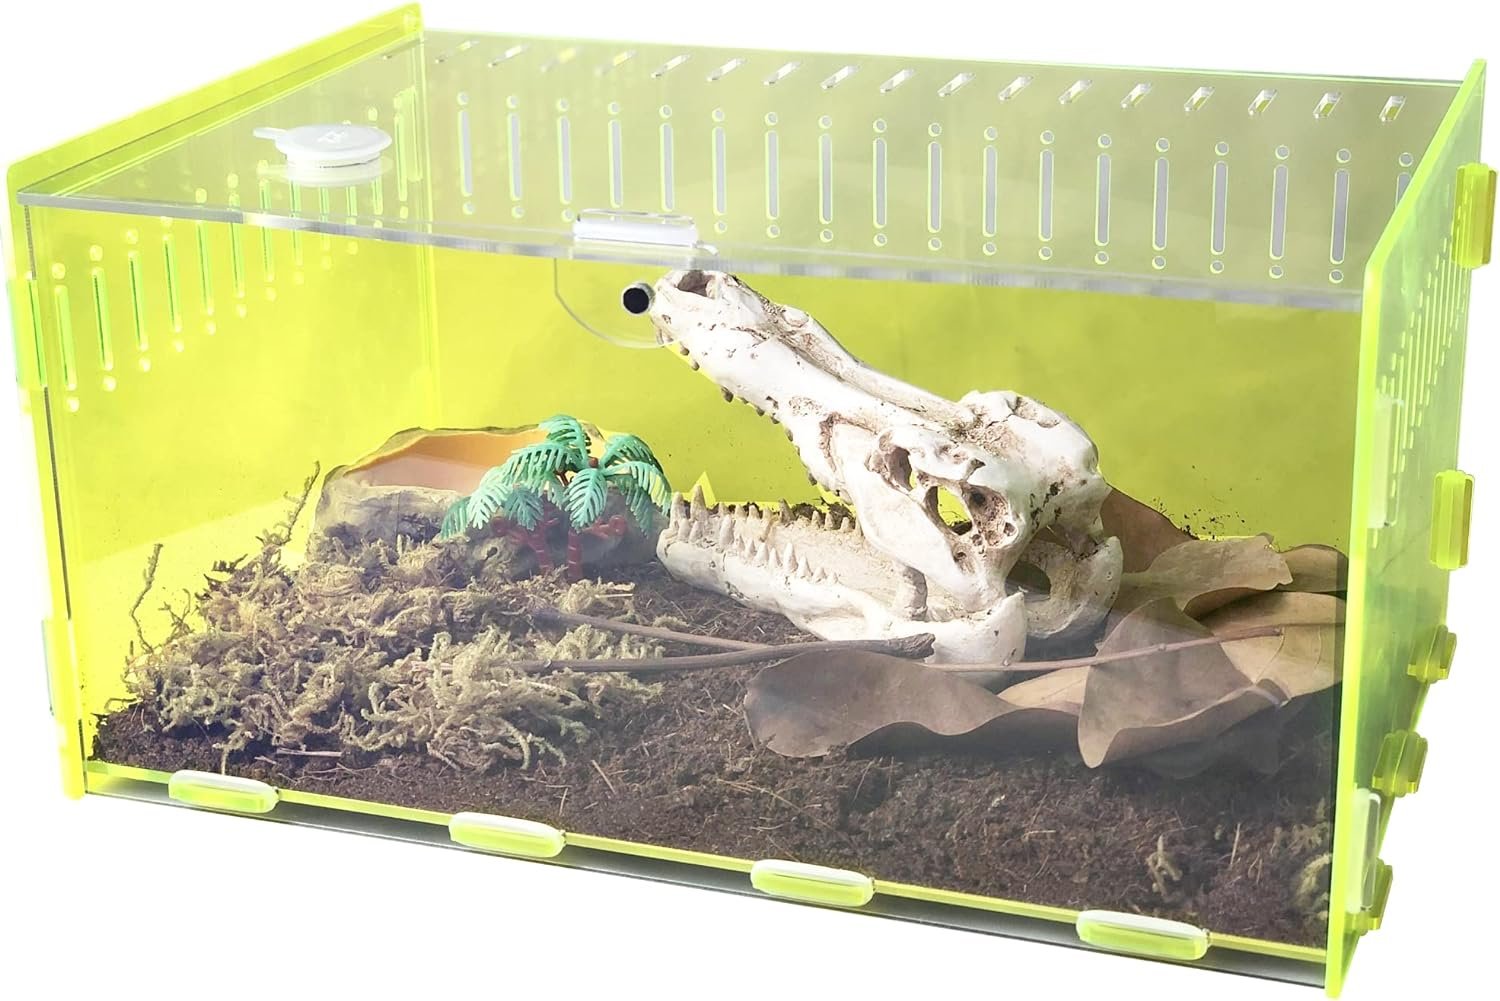 Acrylic Reptile Terrarium, Clear Green Tarantula Enclosure, 12 x 8 x 6Reptile Feeding Tarantula Habitat Box, for Small Reptiles and Invertebrates, Mantis, Spider, Cricket, Snails，Hermit Crabs，Frog